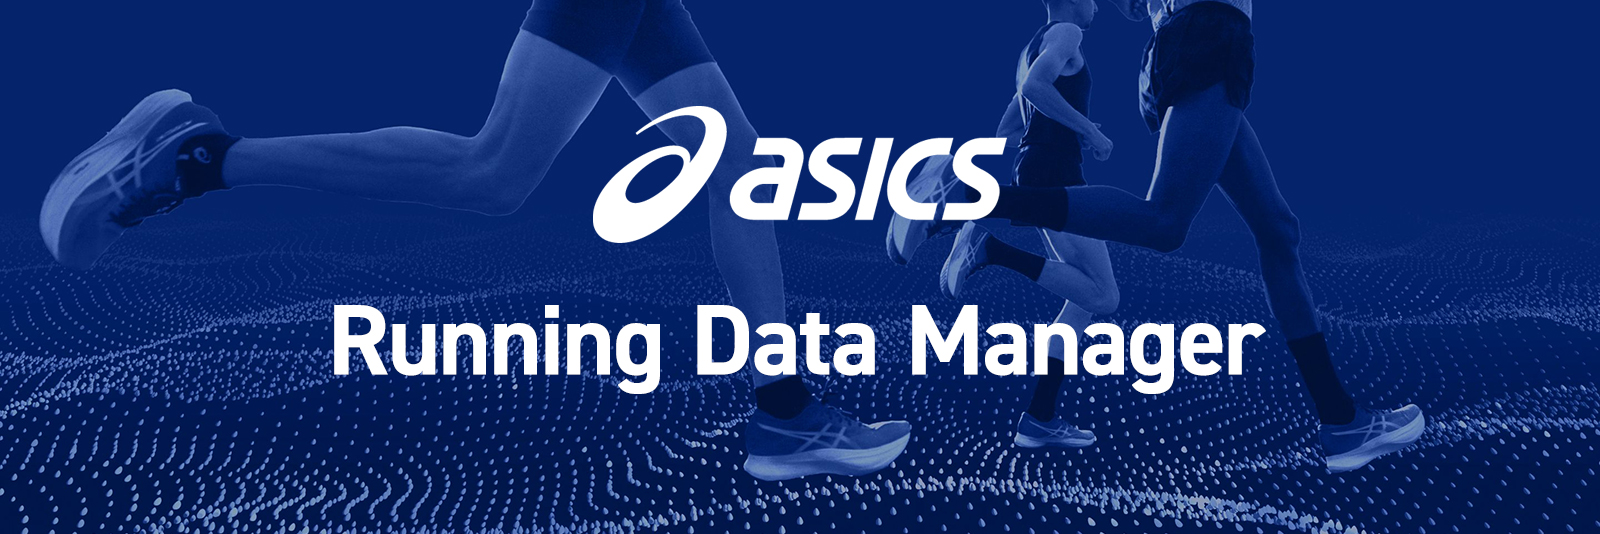 ASCIS Running Data Manager